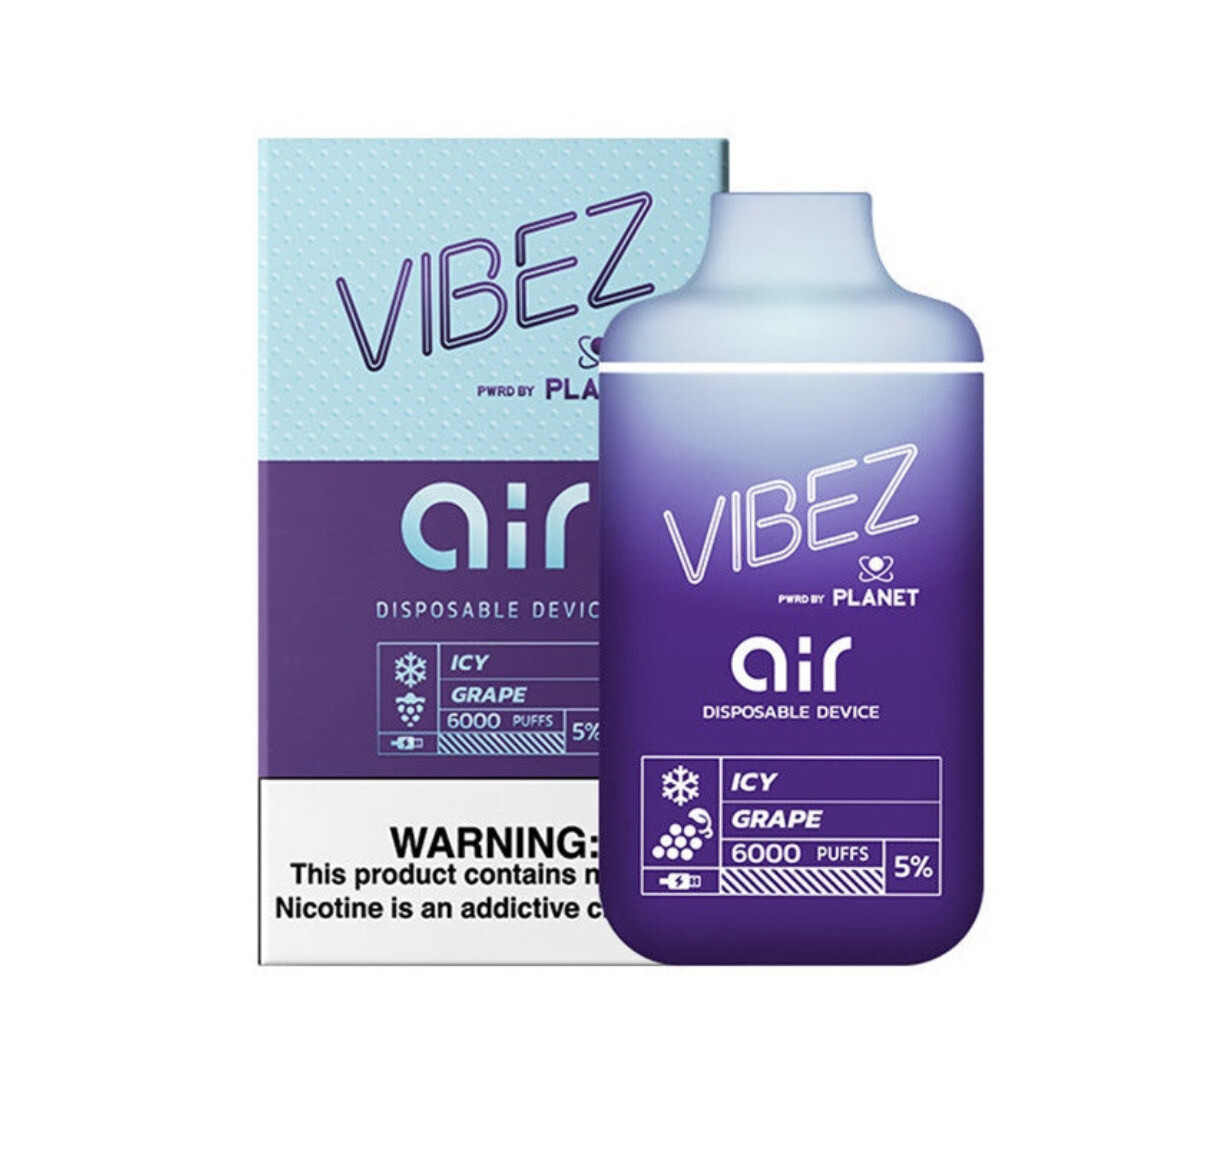 Vibez Air 5% Icy Grape